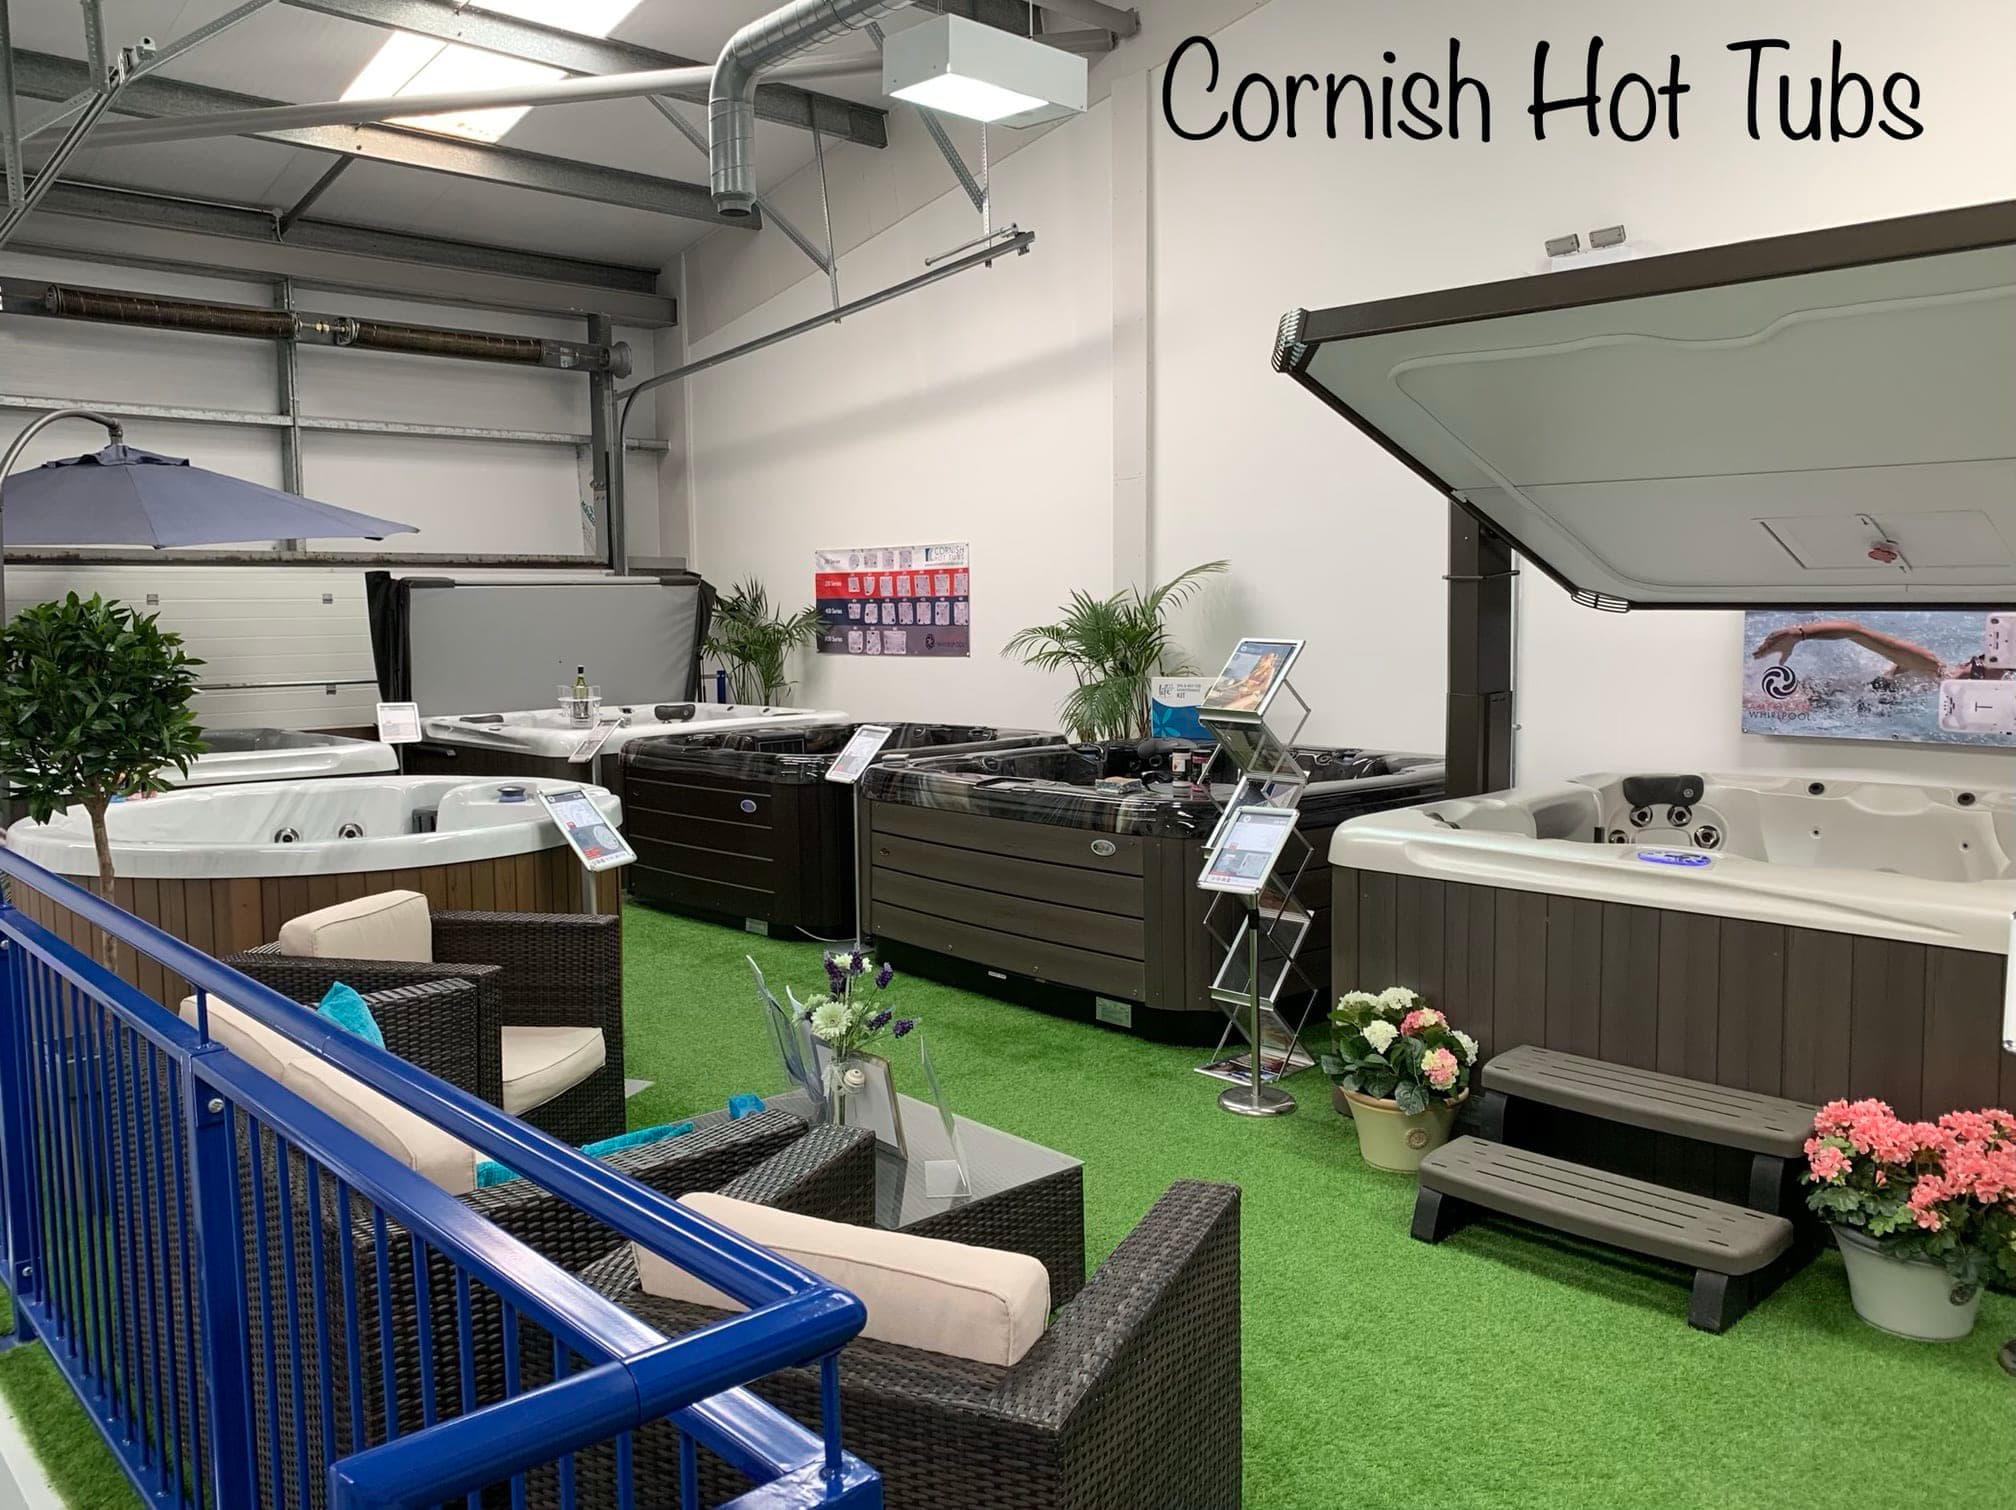 Cornish Hot Tubs St. Columb 01872 573350